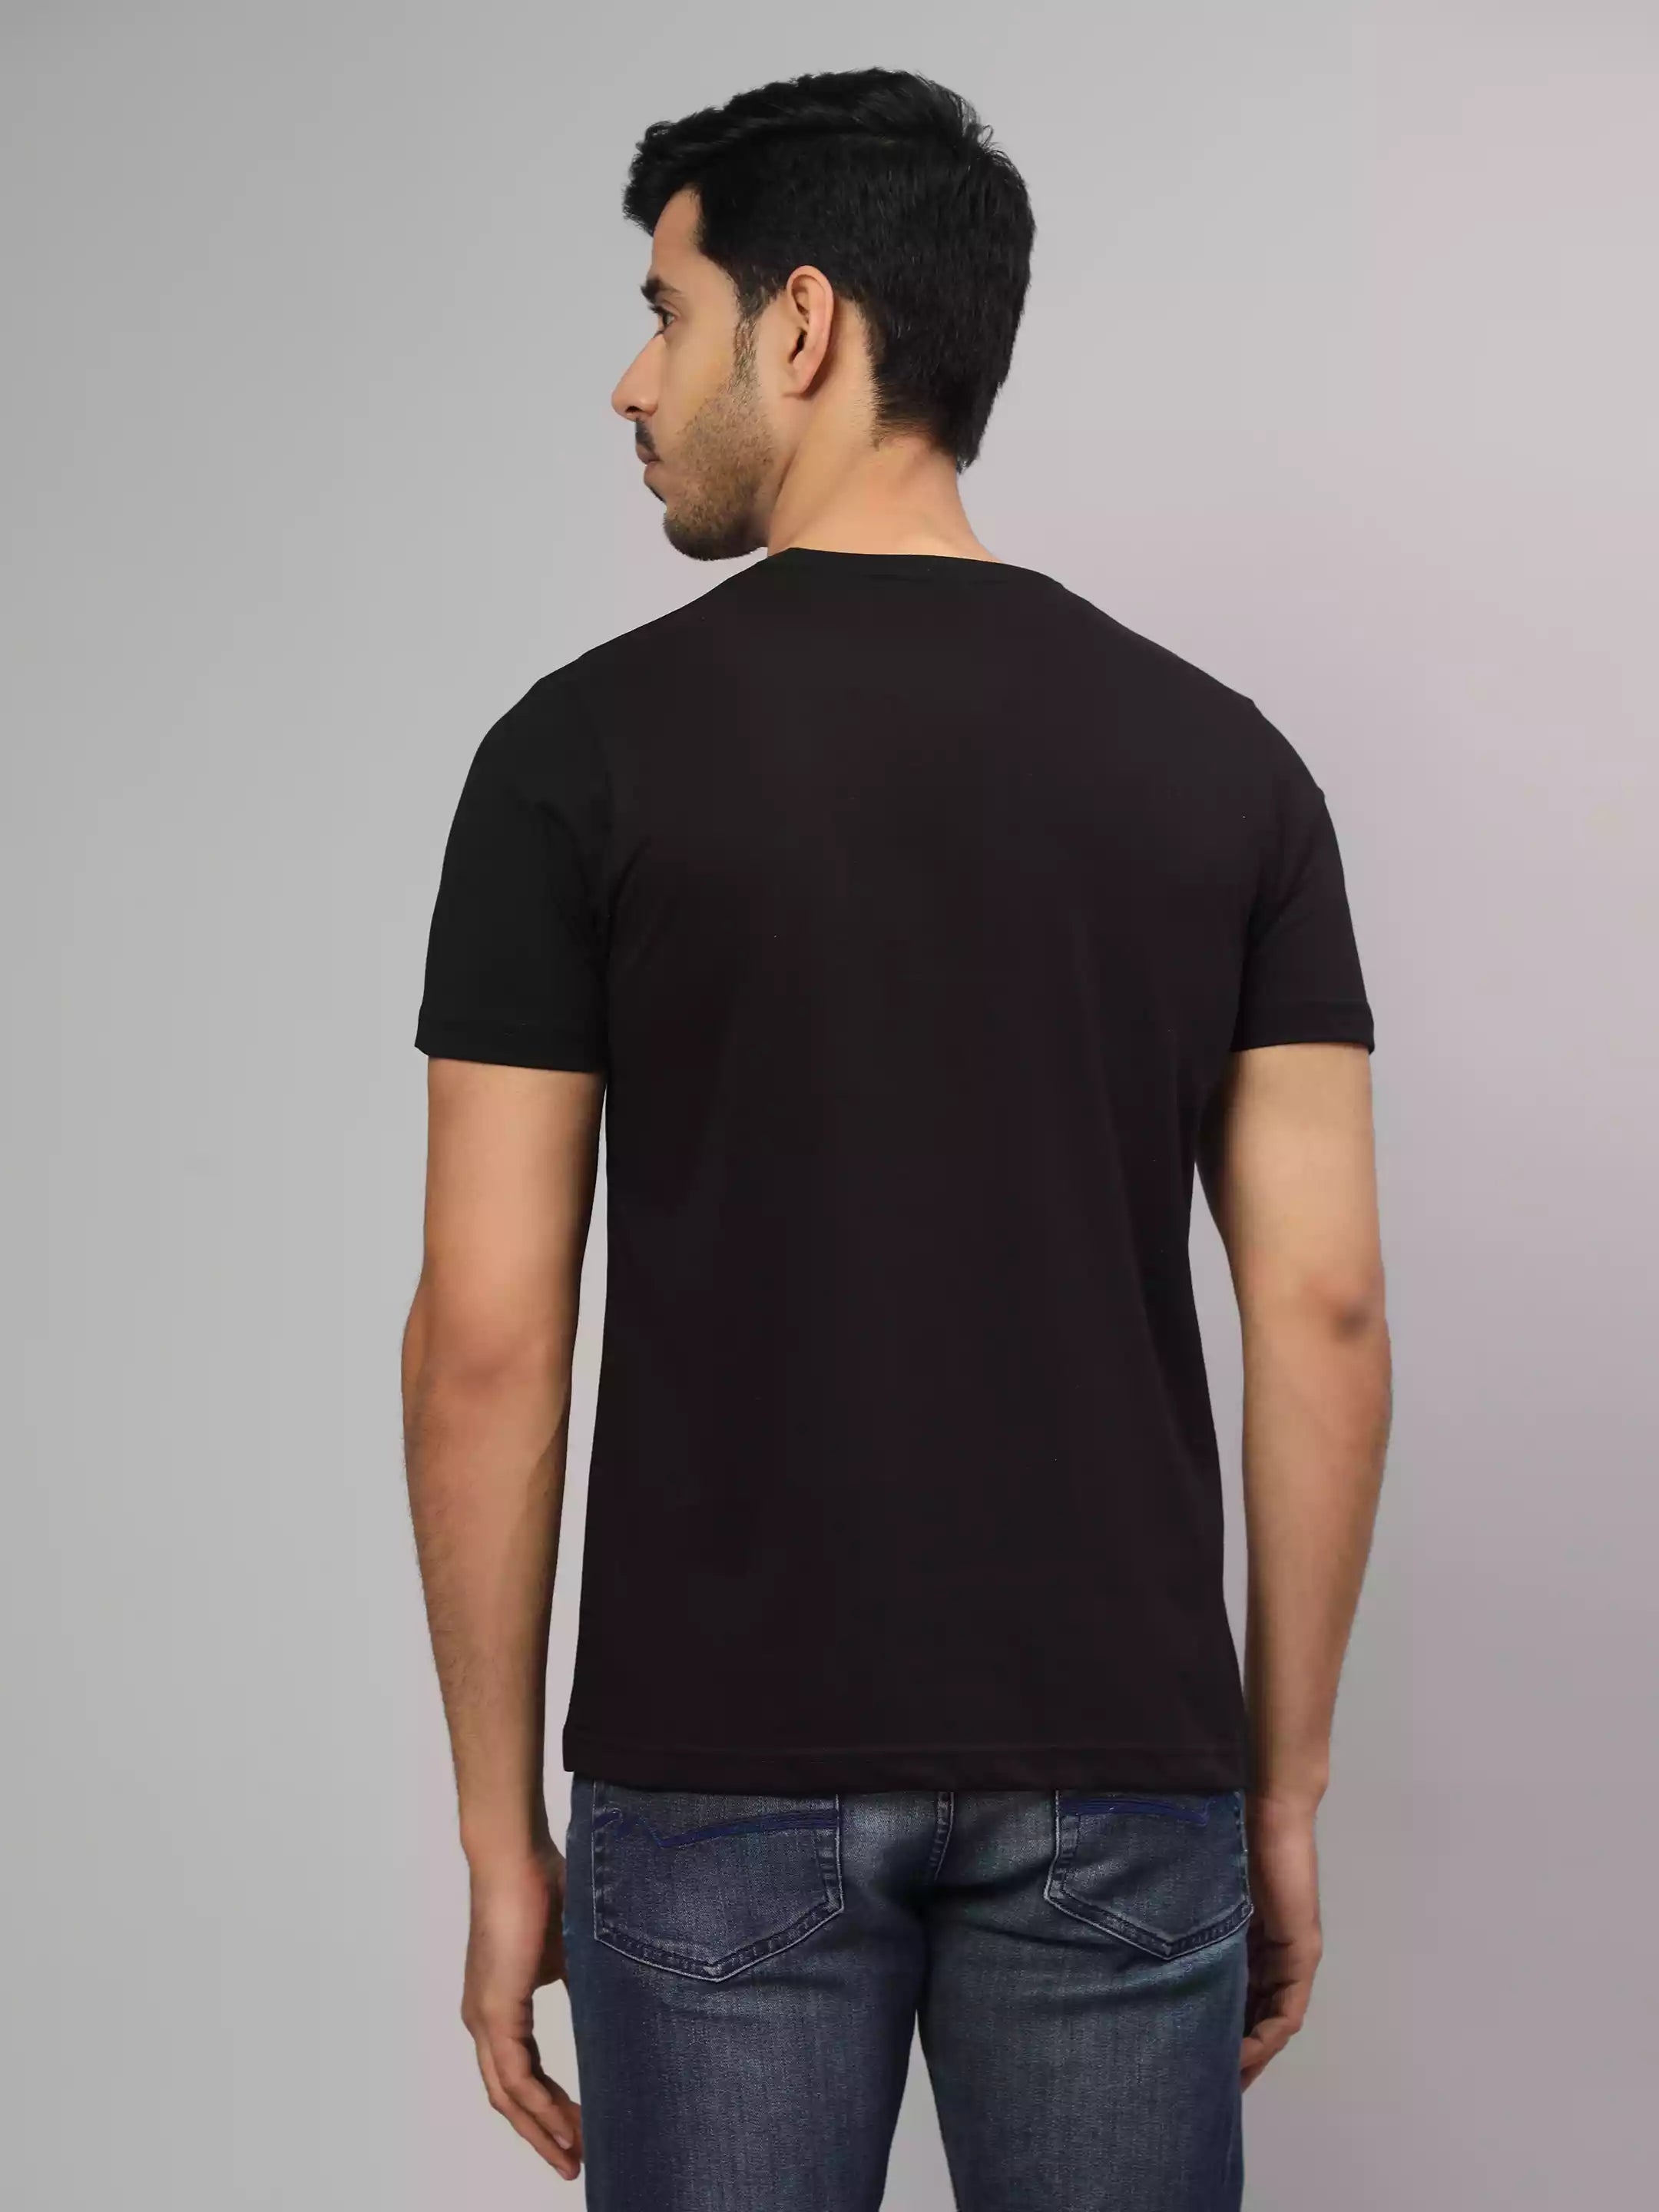 Aaloch 5 Mintat - Sukhiaatma Unisex Marathi Graphic Printed Black T-shirt